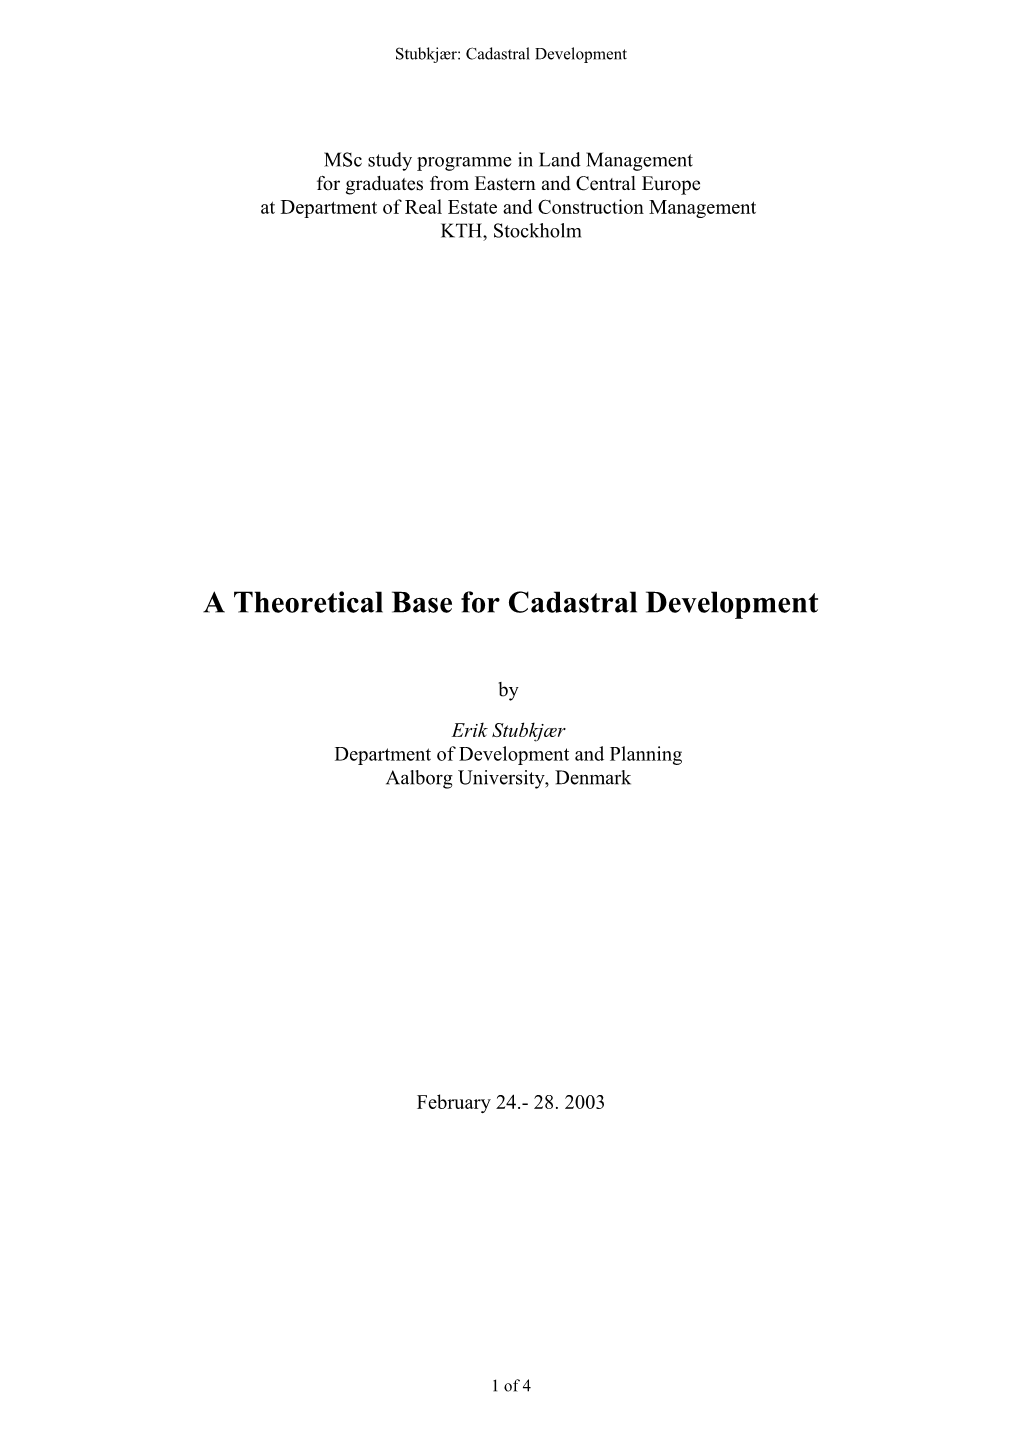 Stubkjær: Cadastral Development. - KTH, 2003